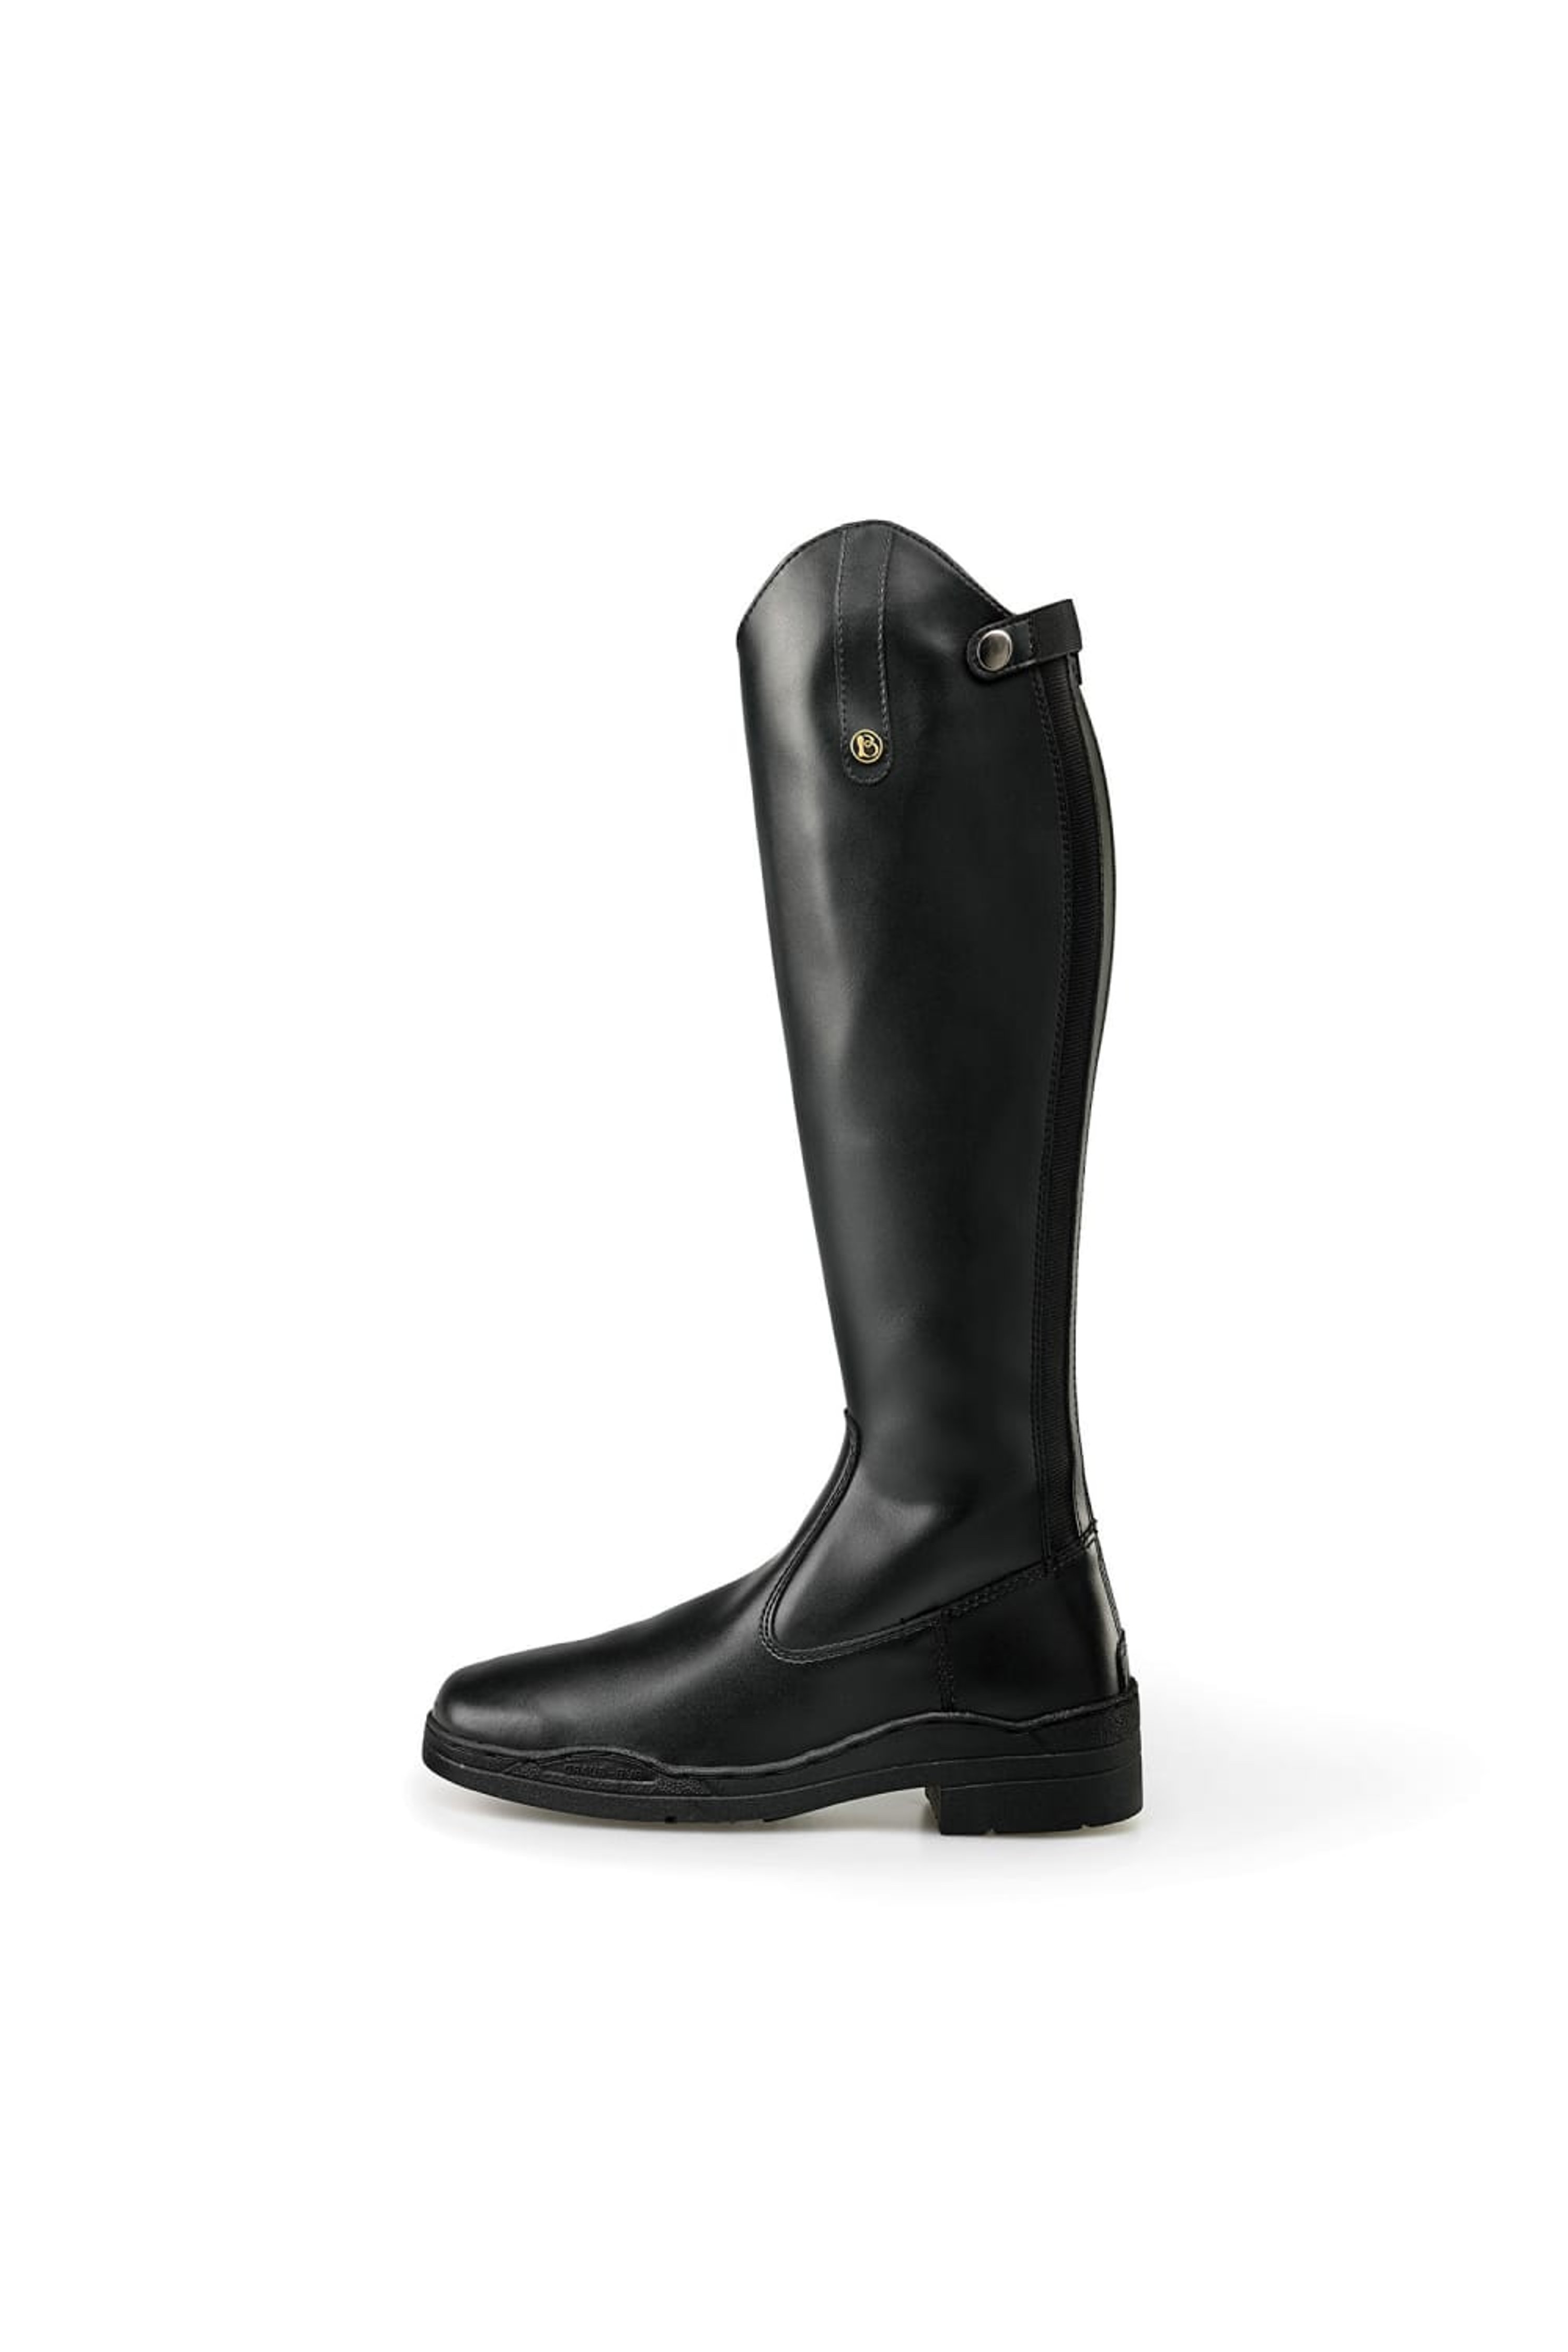 Brogini Unisex Adult Modena Extra Wide Long Riding Boots (black)